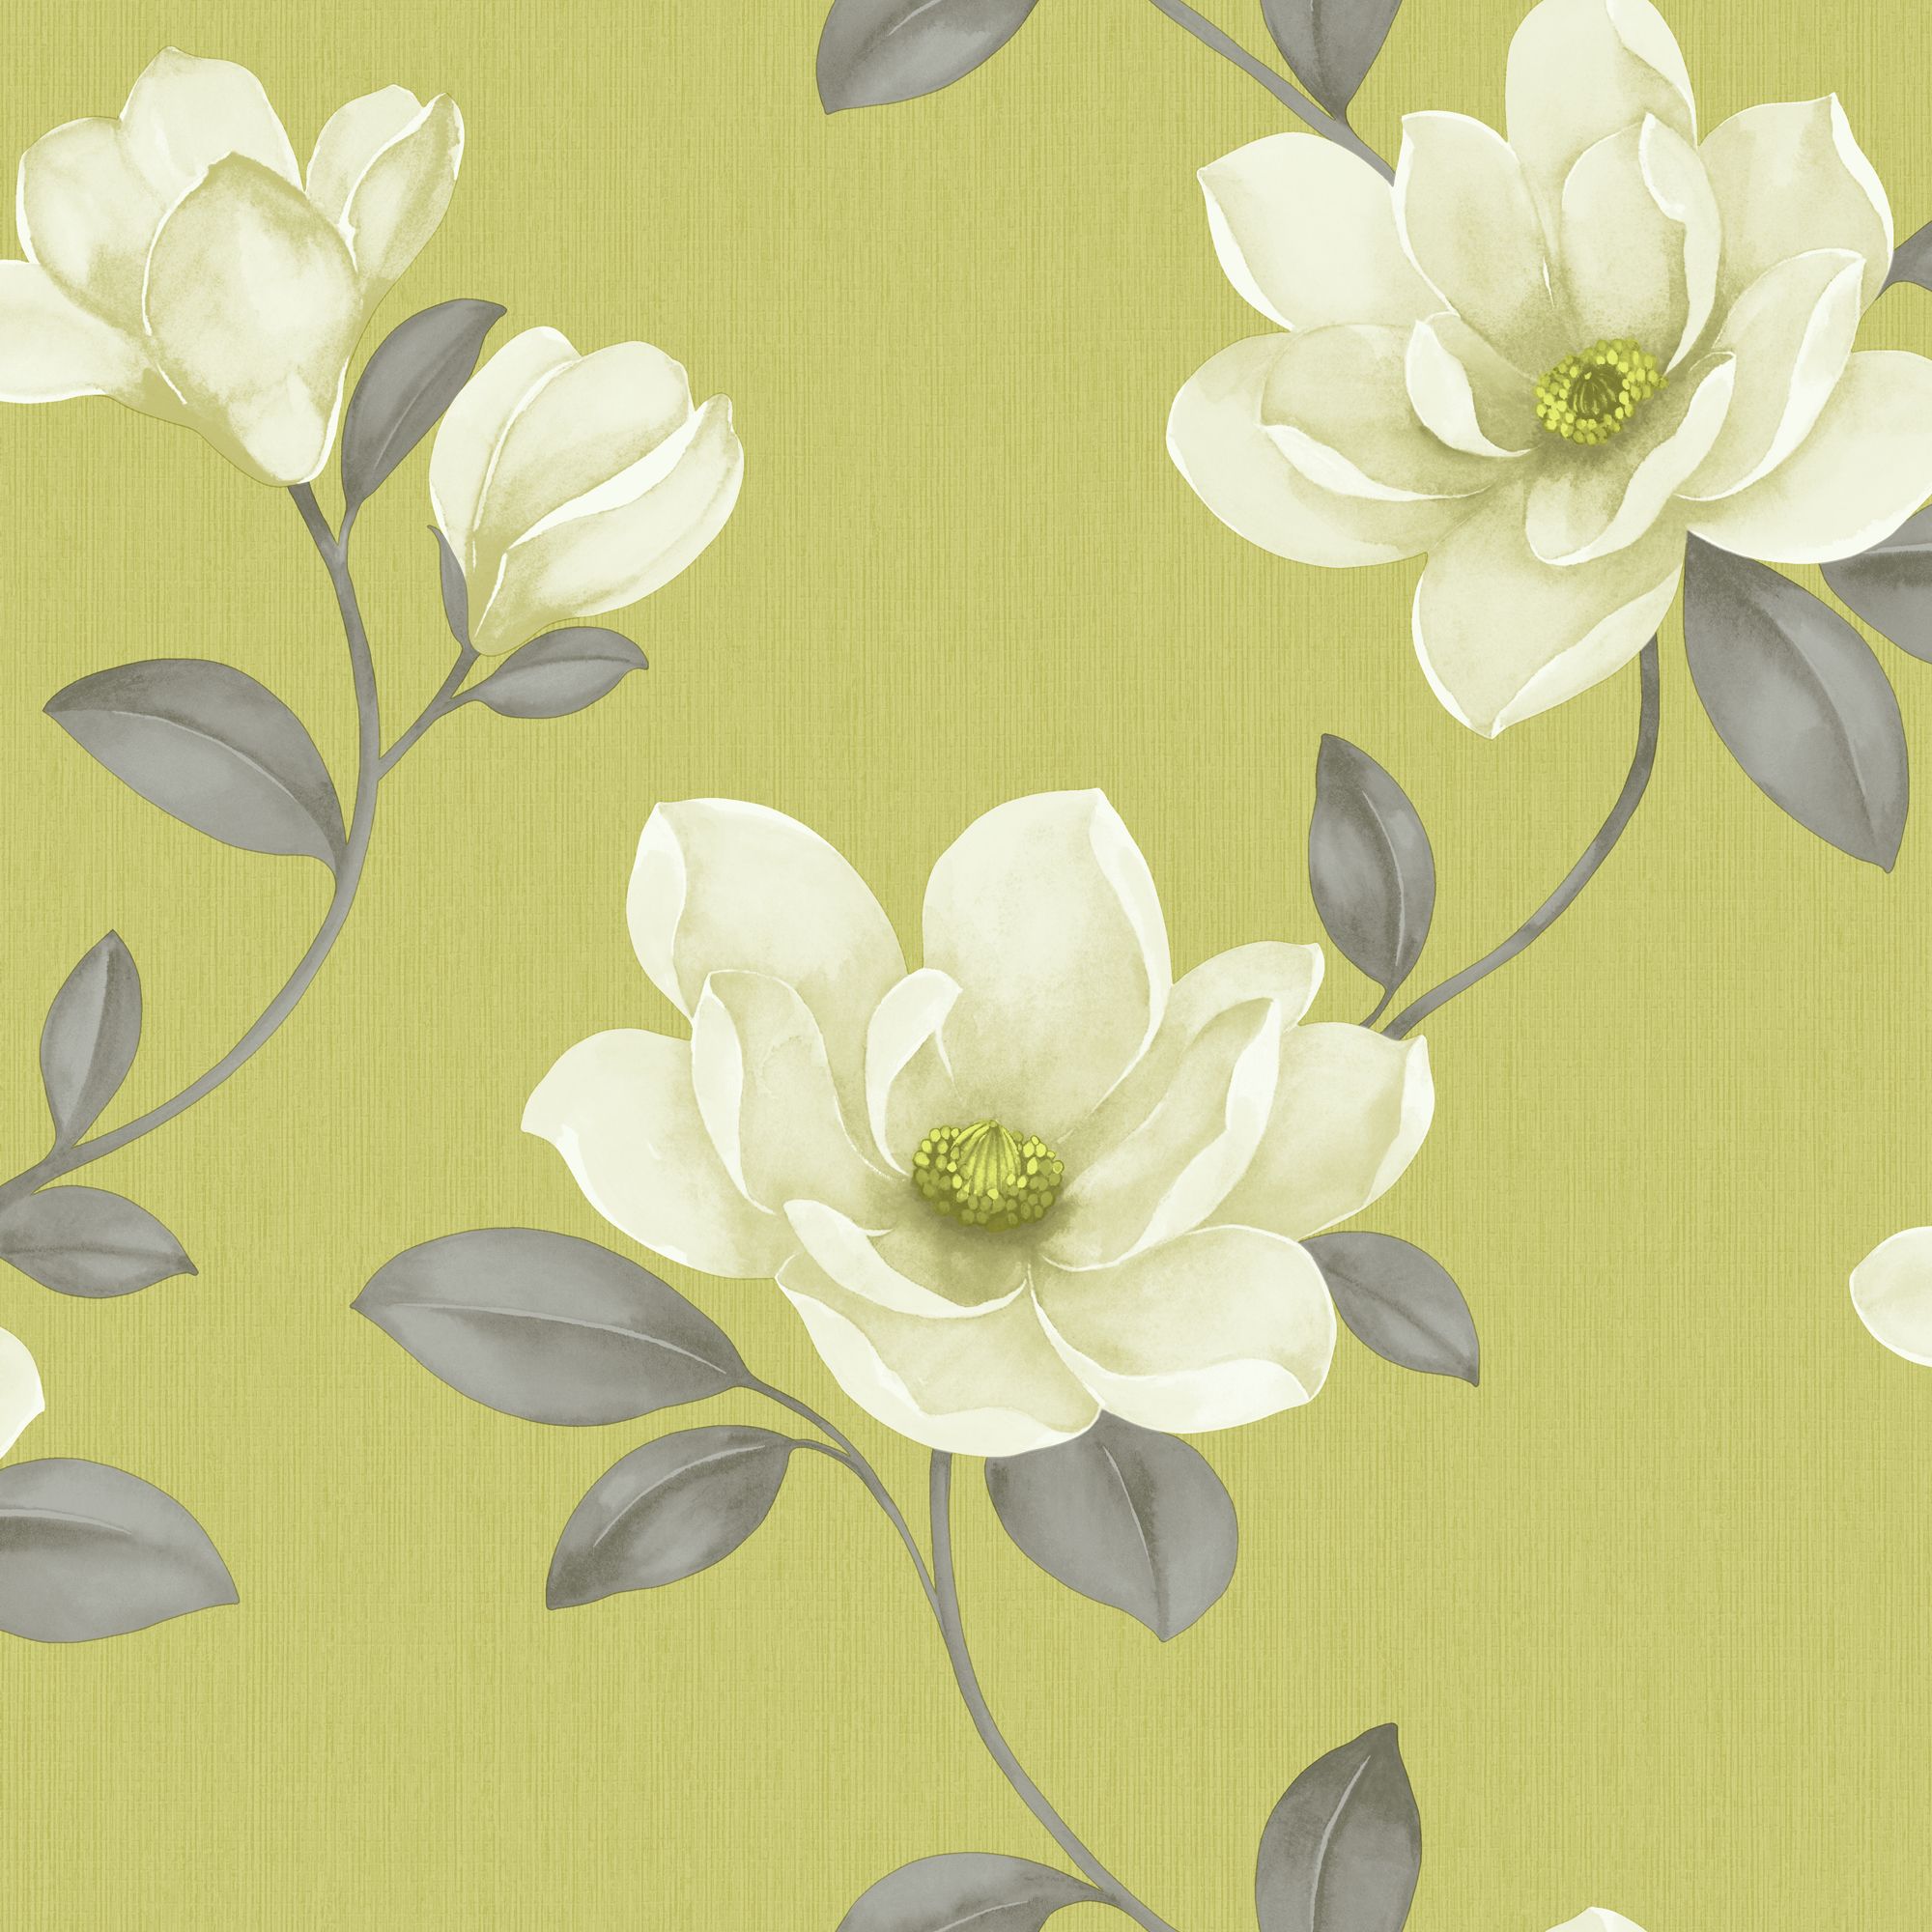 Sophie Conran Magnolia Cream & Green Flower Wallpaper | Departments ...